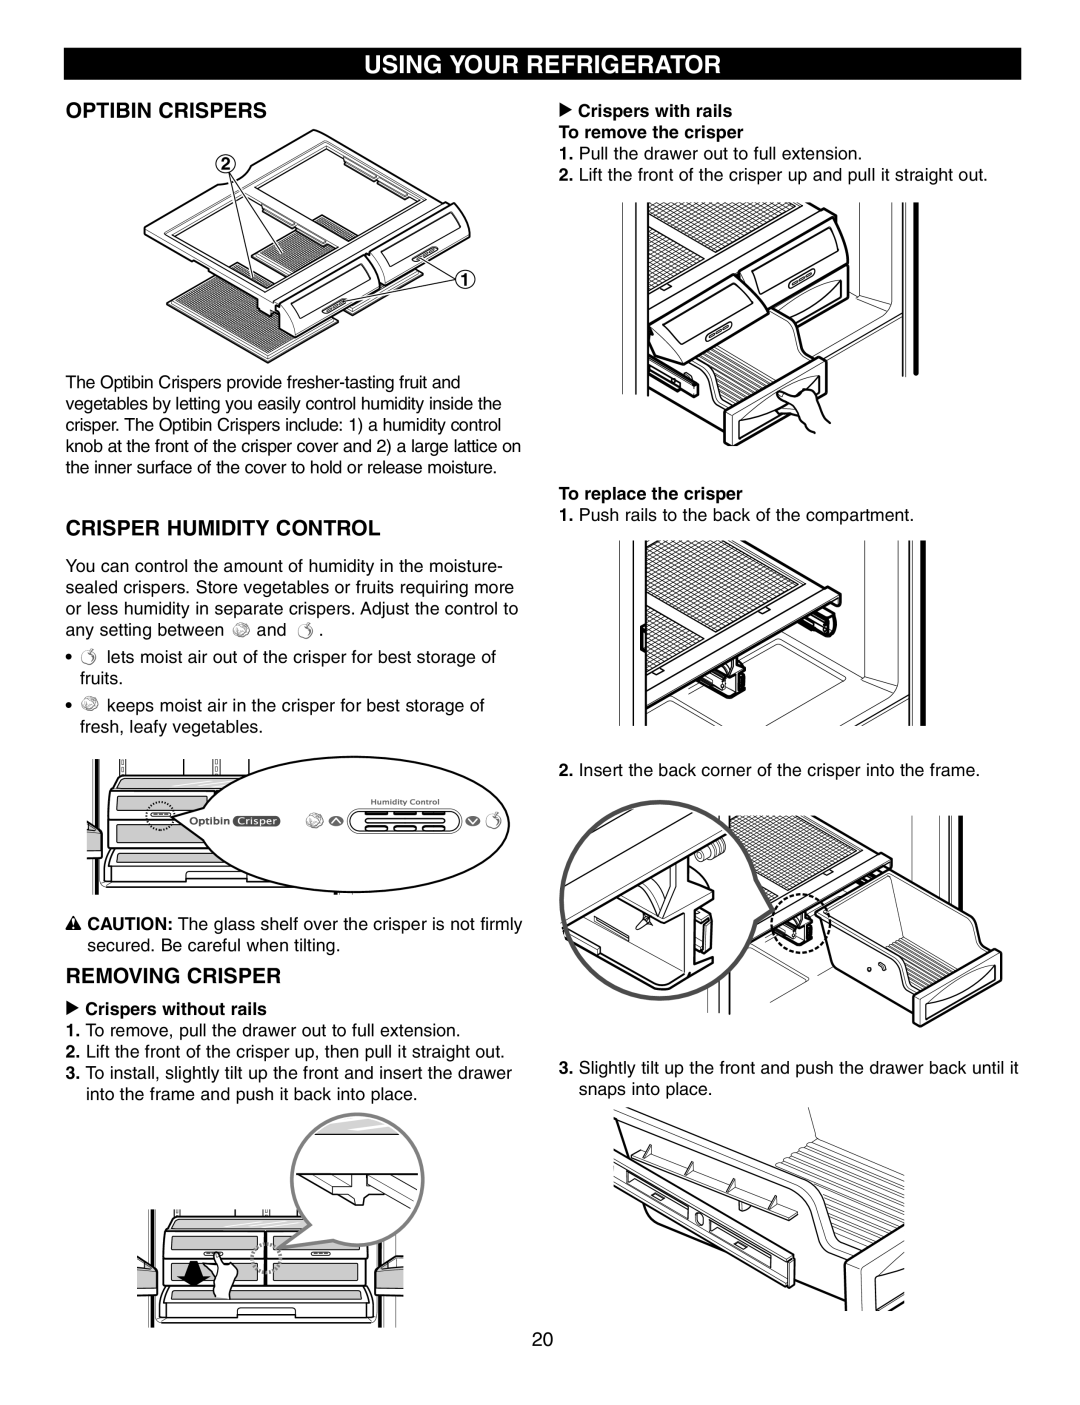 LG Electronics LFC25760 manual Using Your Refrigerator, Optibin Crispers, Crisper Humidity Control, Removing Crisper 